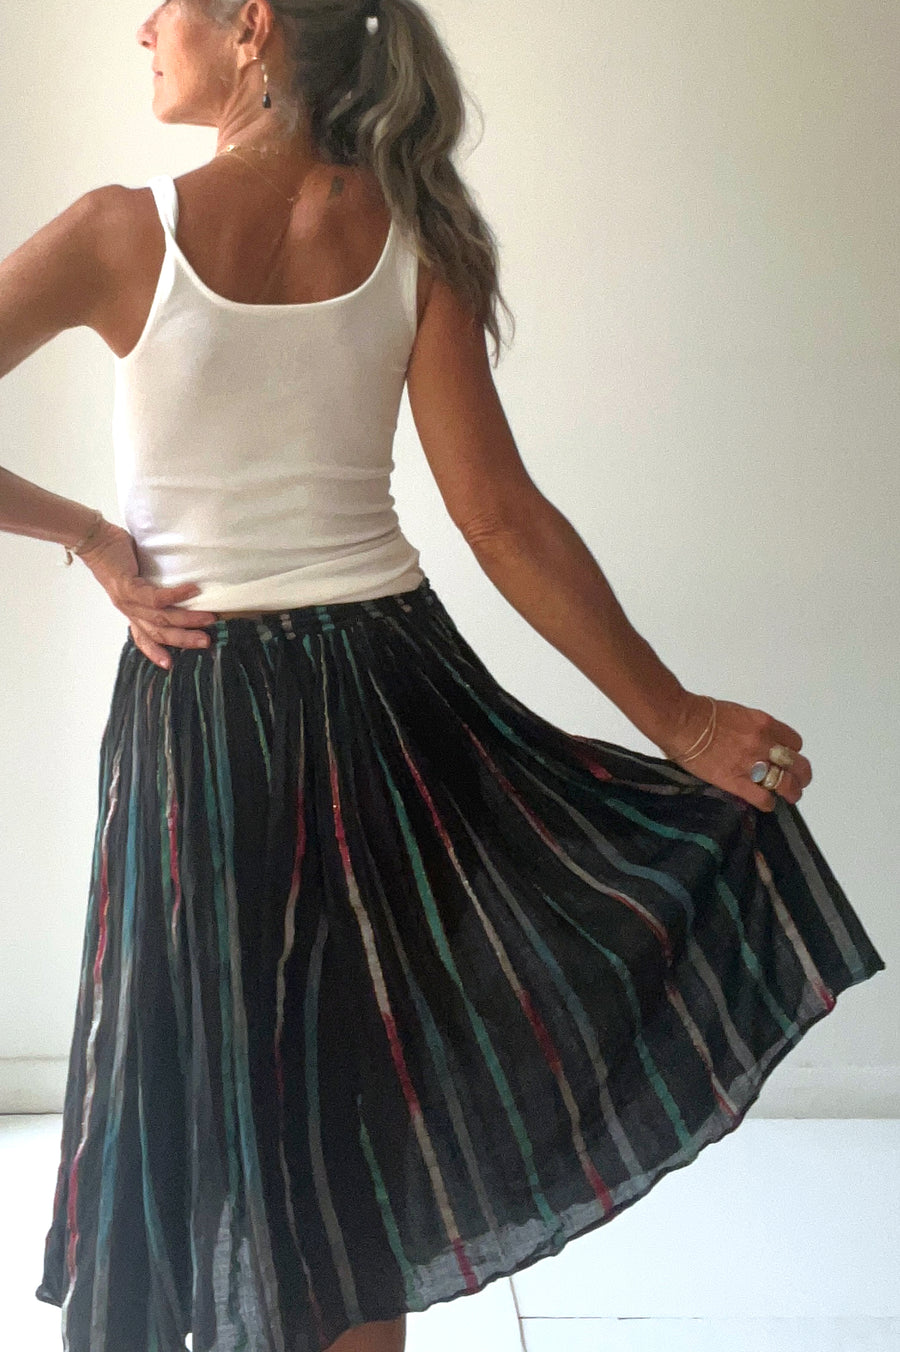 Vintage Black Skirt with Lame Stripes